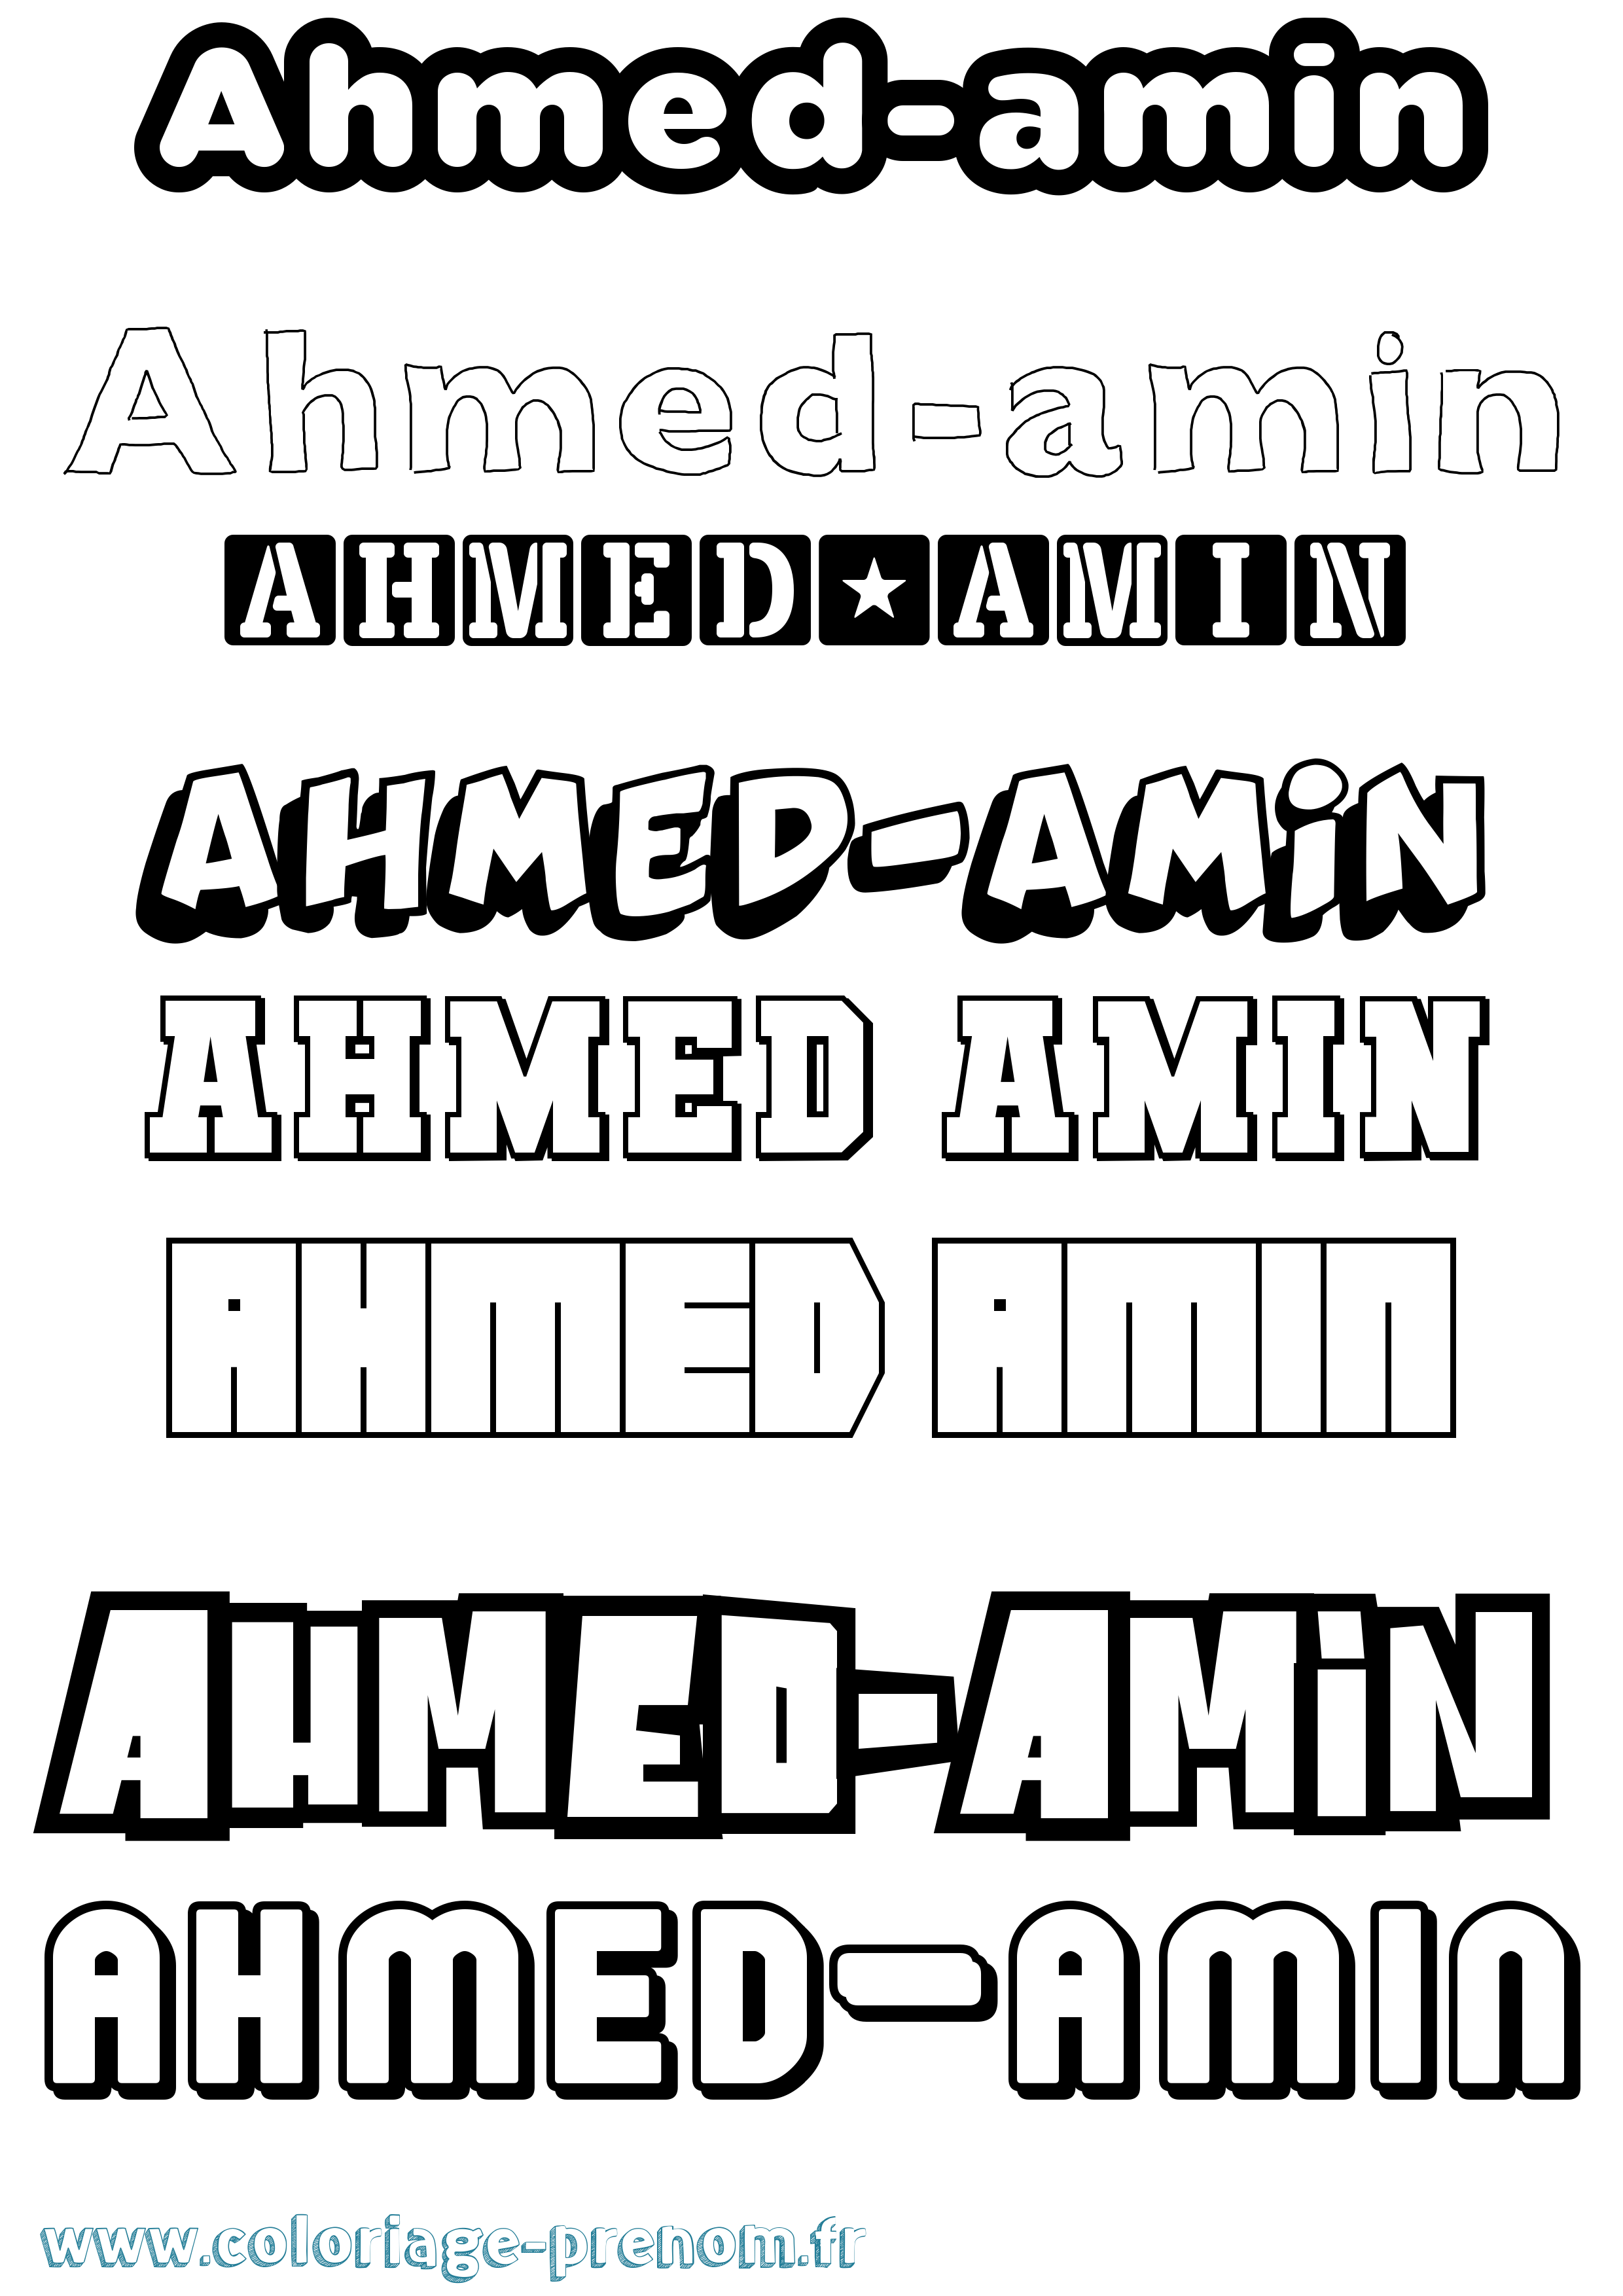 Coloriage prénom Ahmed-Amin Simple